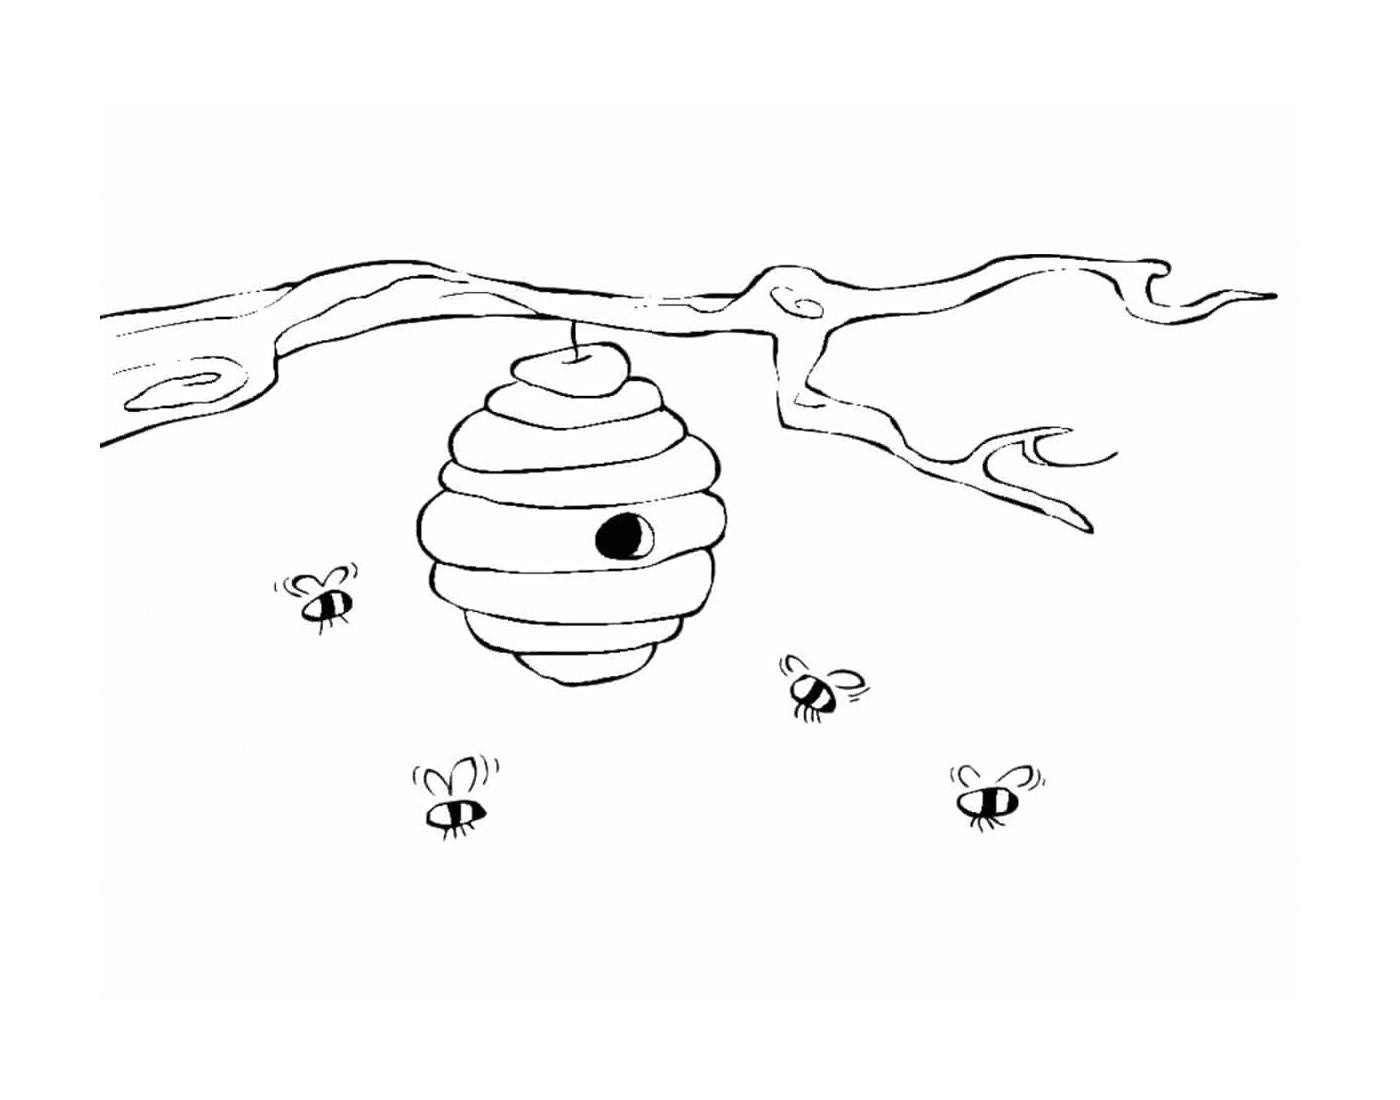  habitat naturale delle api 